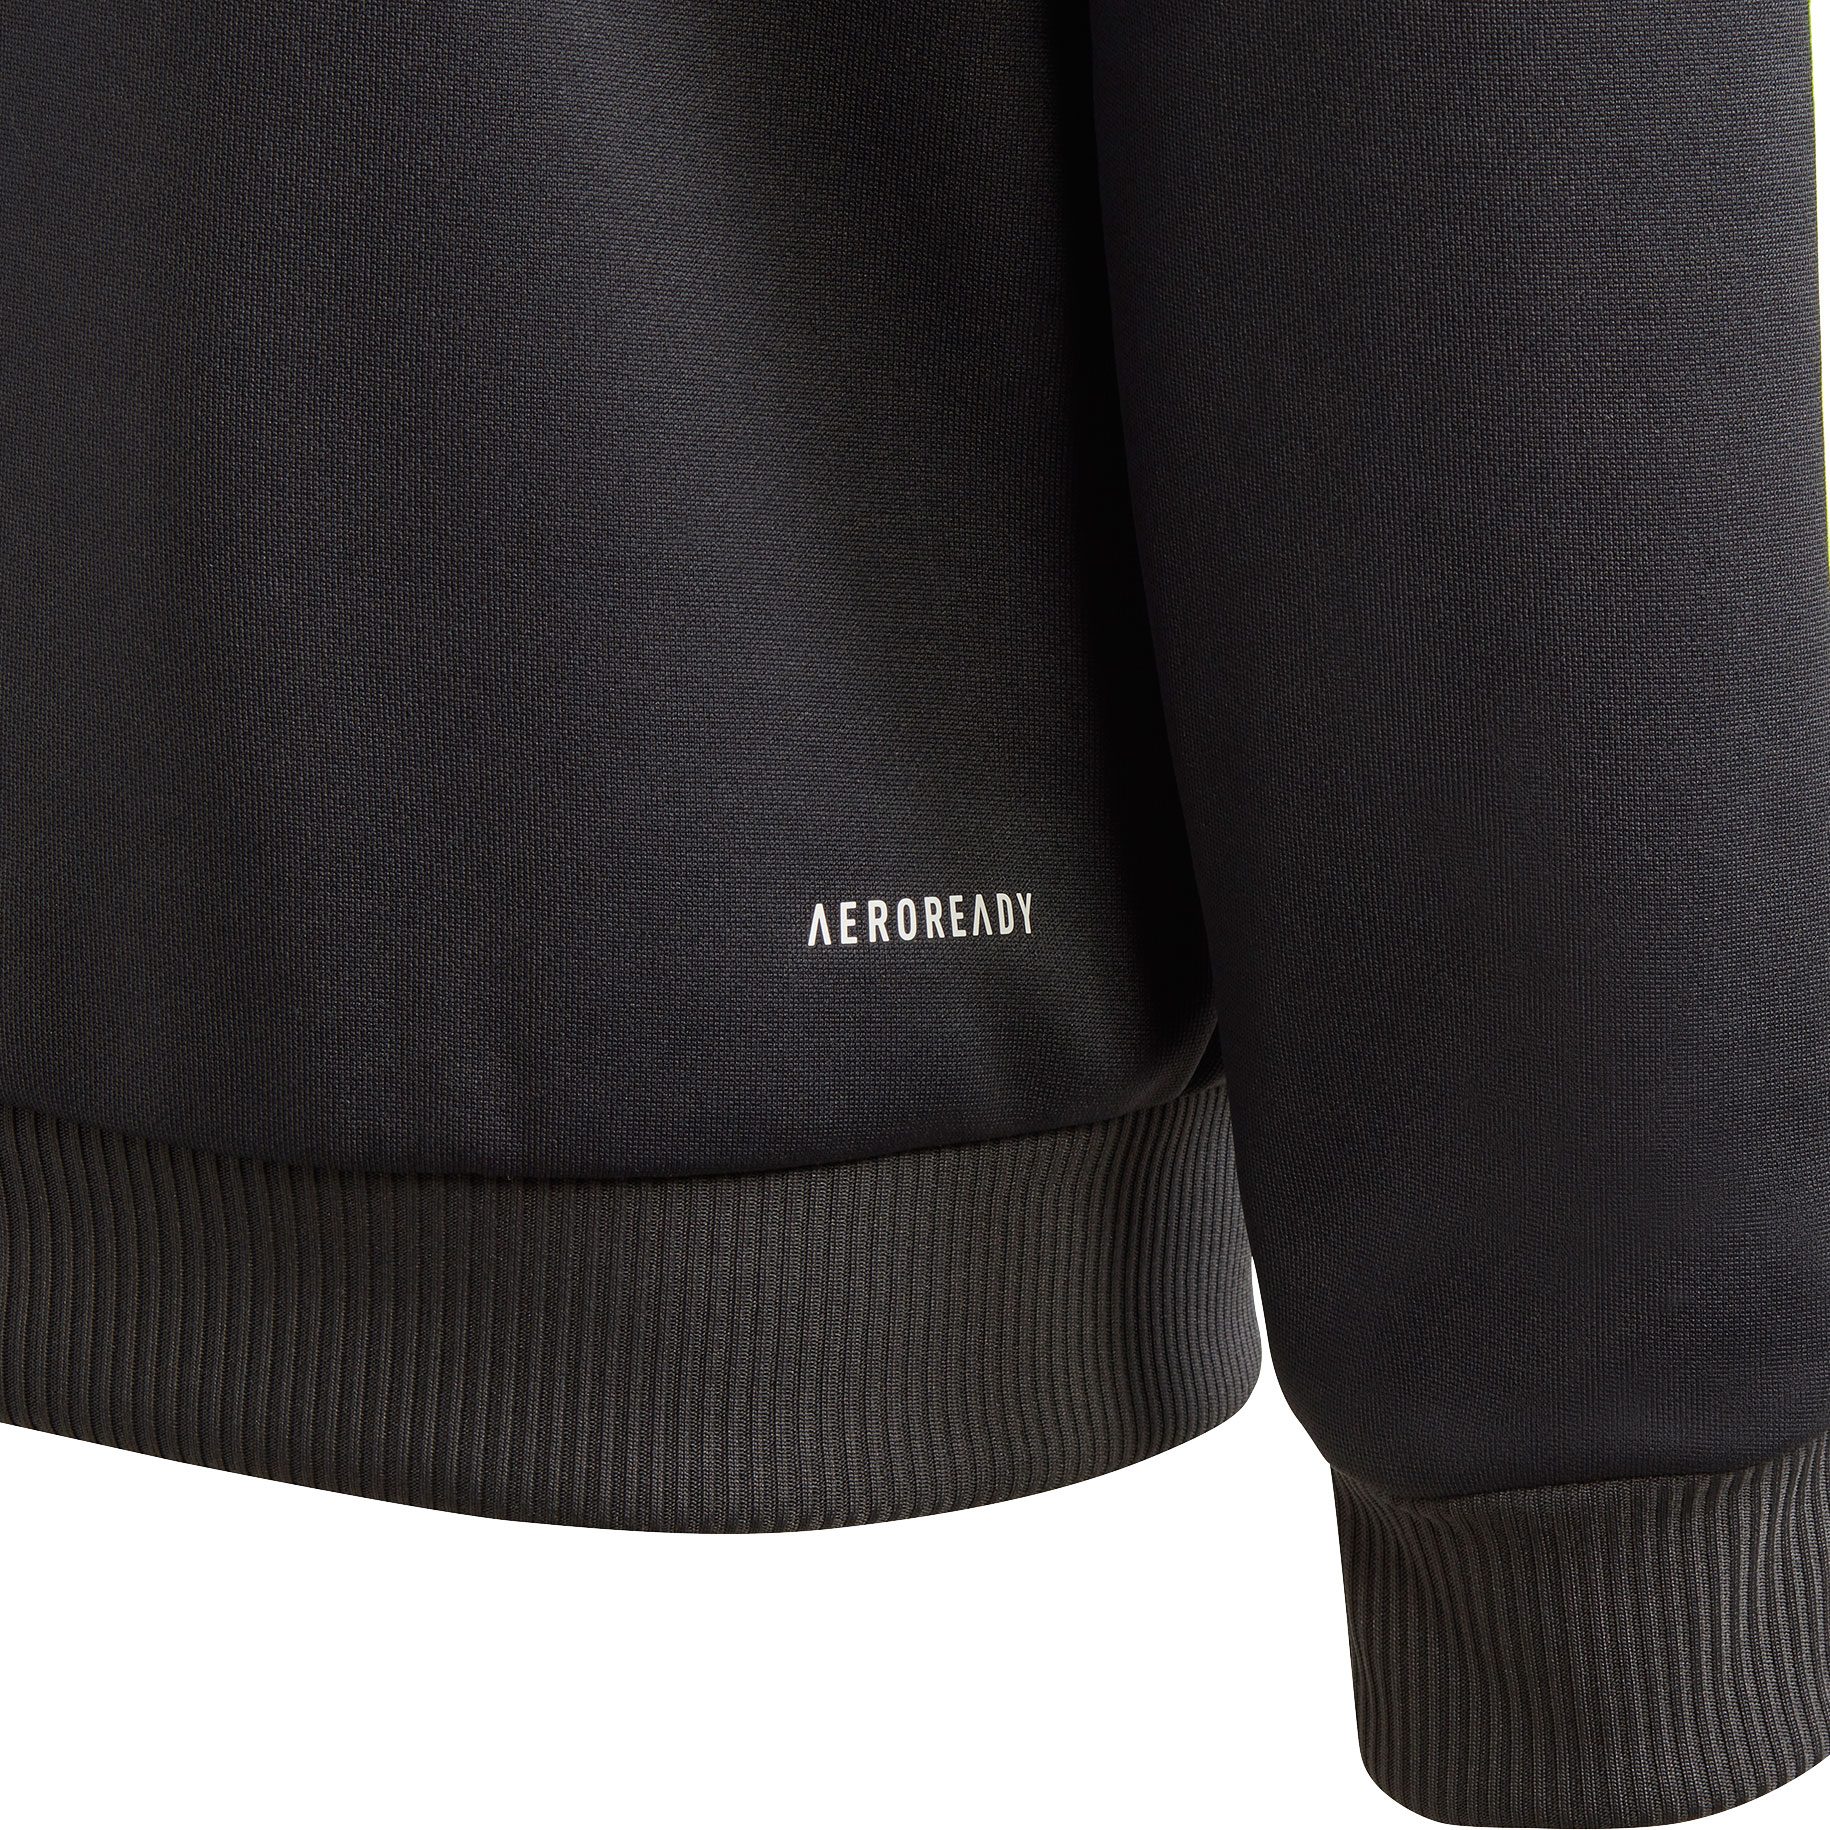 adidas - carbon Bittl Essentials 3-Stripes at Sport Train Aeroready Jacket Shop Boys Hooded